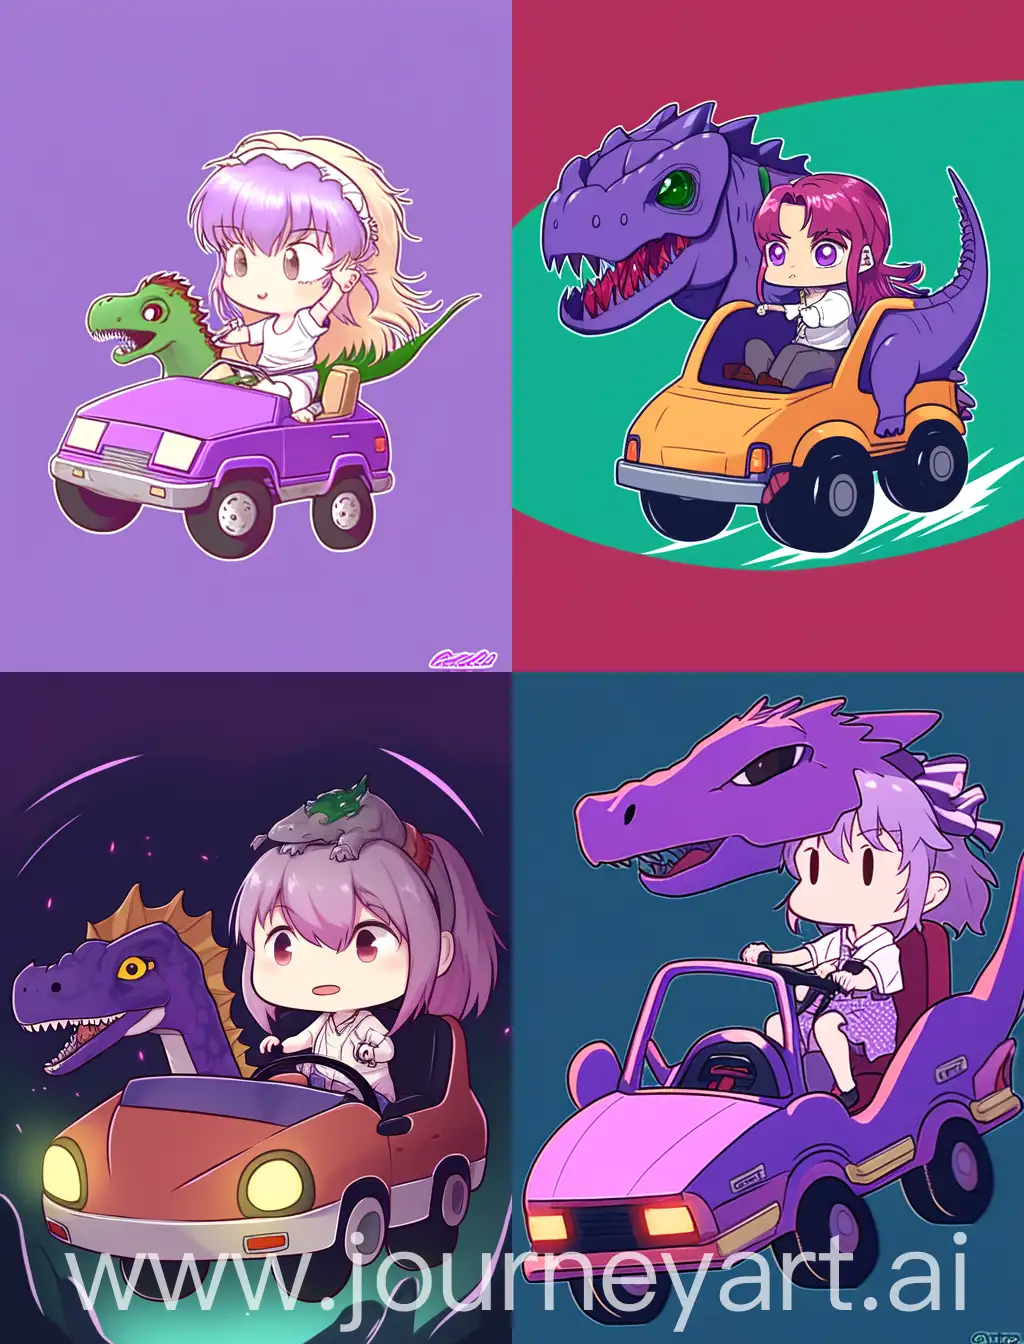 Chibi-Girl-Driving-Car-with-Dinosaur-Fun-Cartoon-Scene-on-Purple-Background